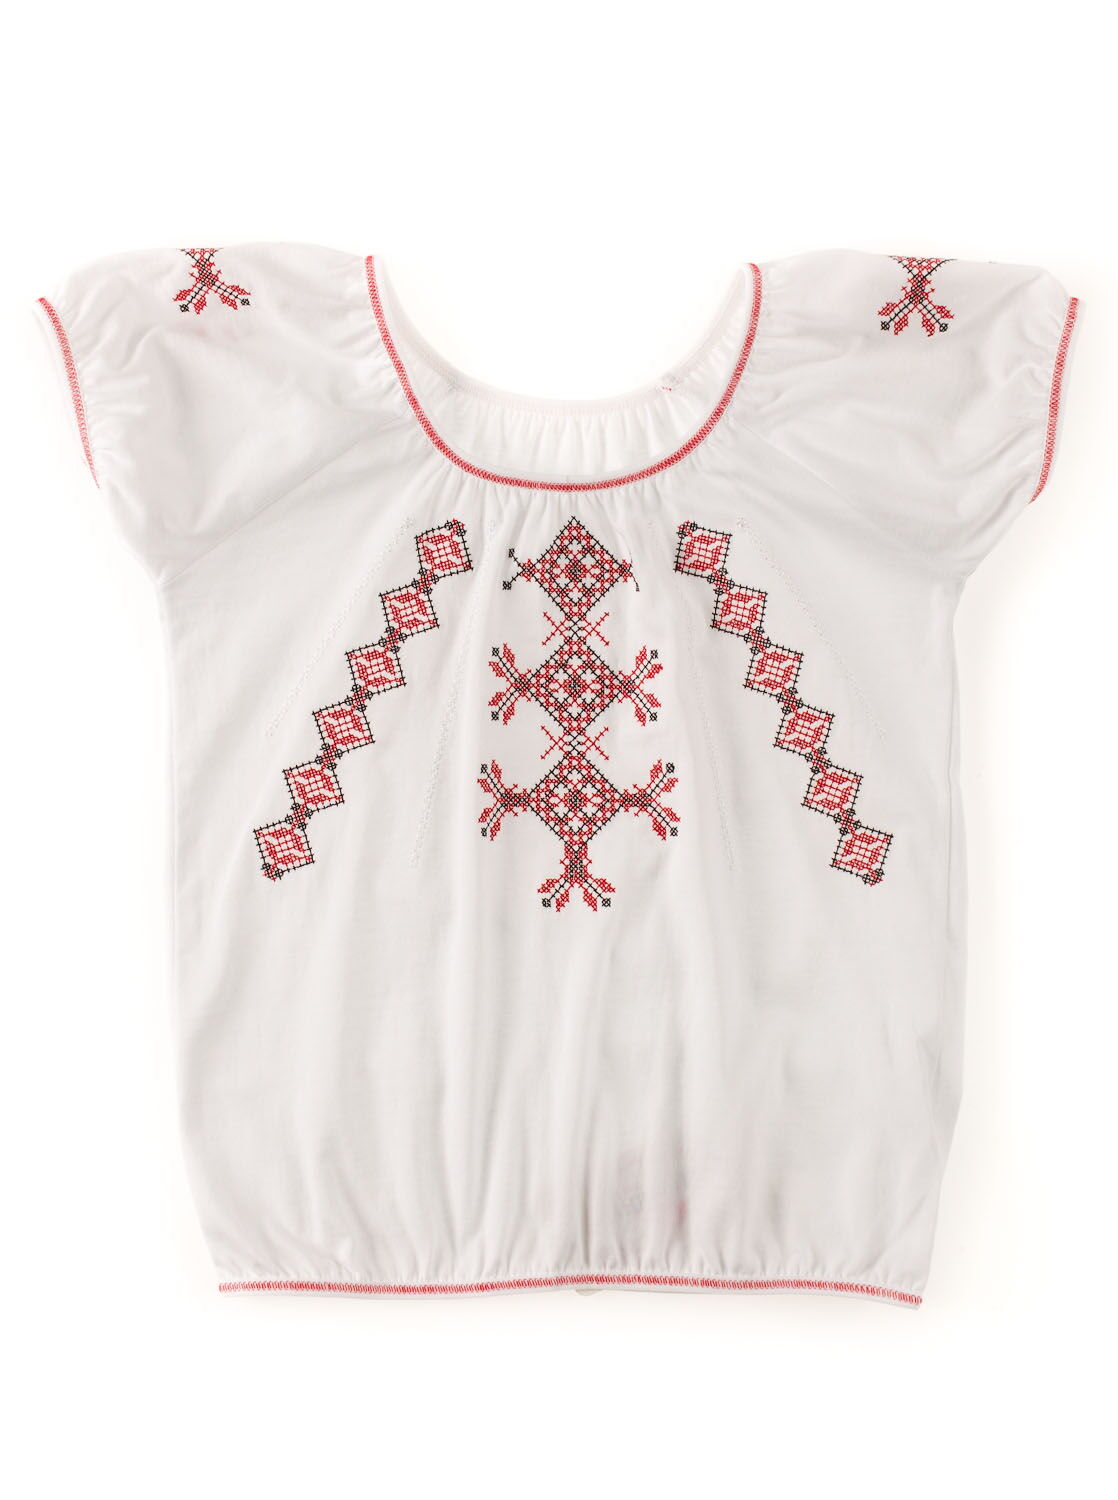 Блузка-вышиванка с коротким рукавом для девочки Фламинго красная 719-101 - цена